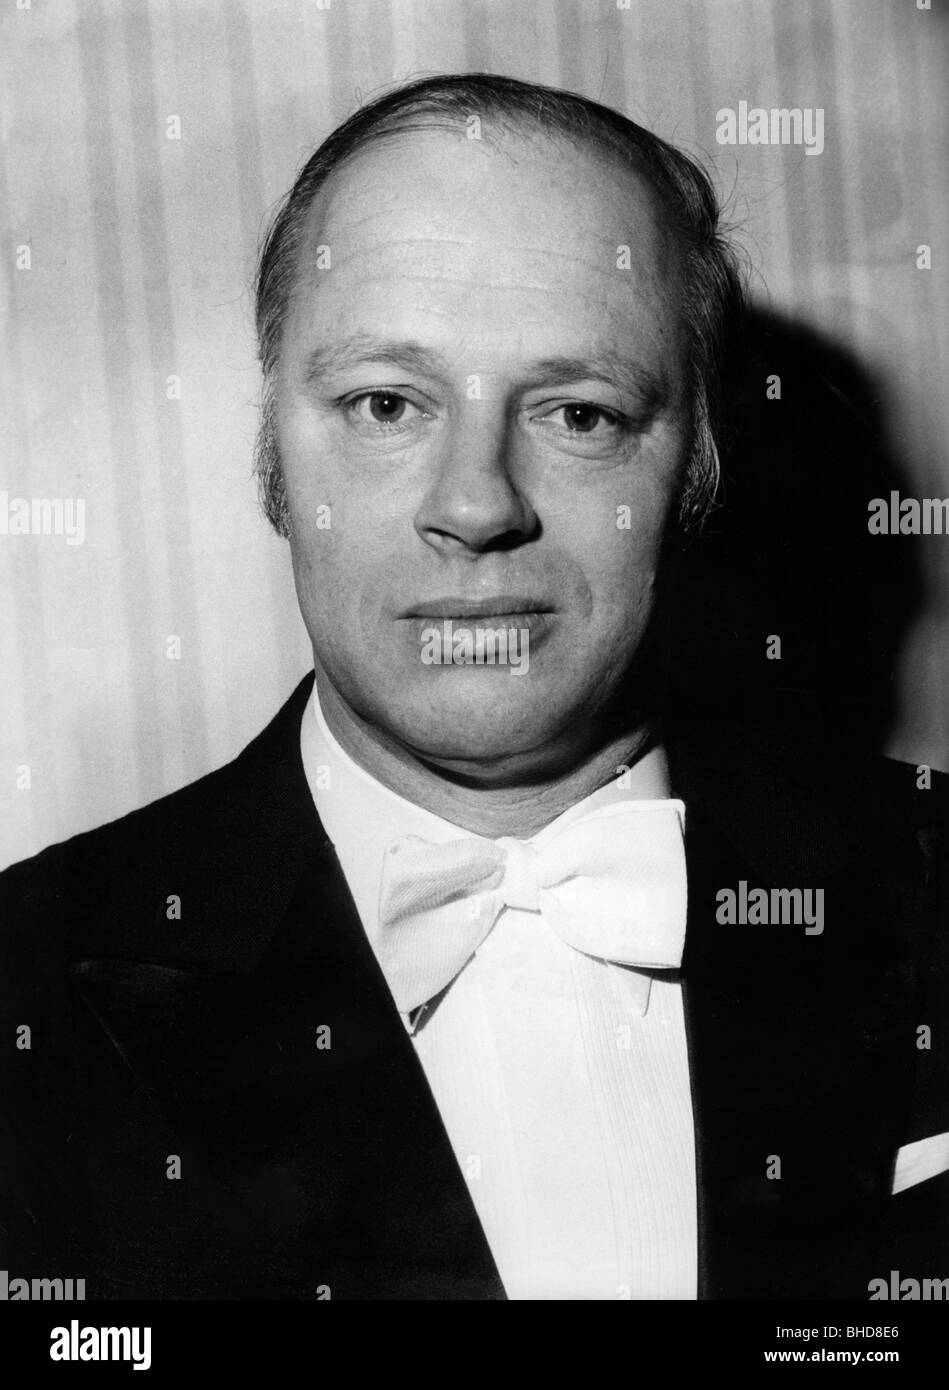 Haitink, Bernard, * 4.3.1929, Dutch conductor, portrait, Stock Photo